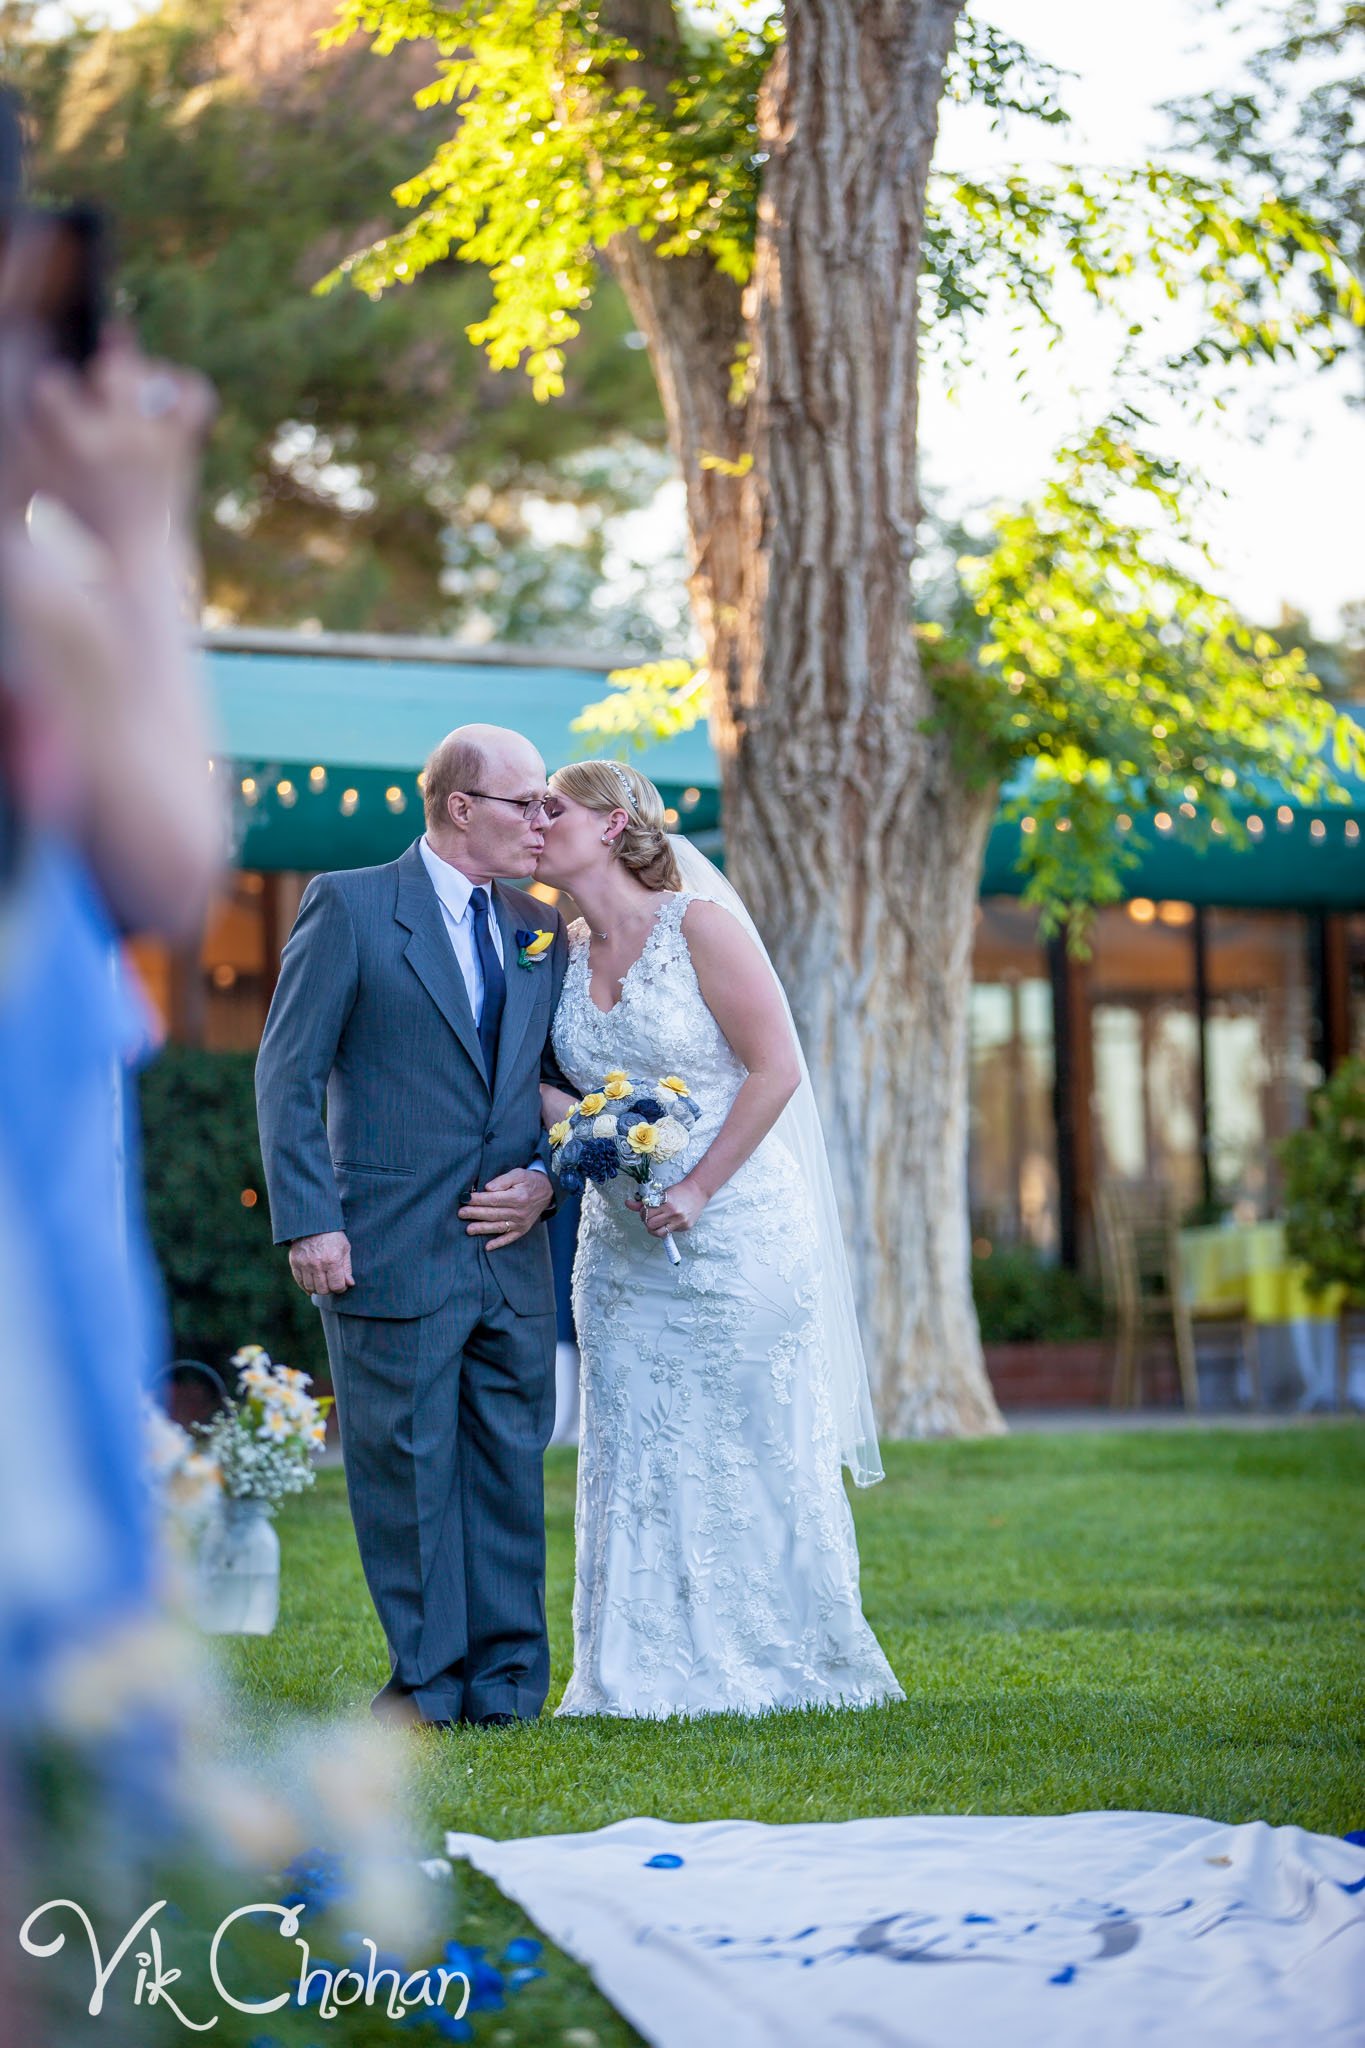 Ana-and-Jose-Las-Vegas-Wedding-at-The-Secret-Garden-Vik-Chohan-Photography-and-Photobooth136.jpg